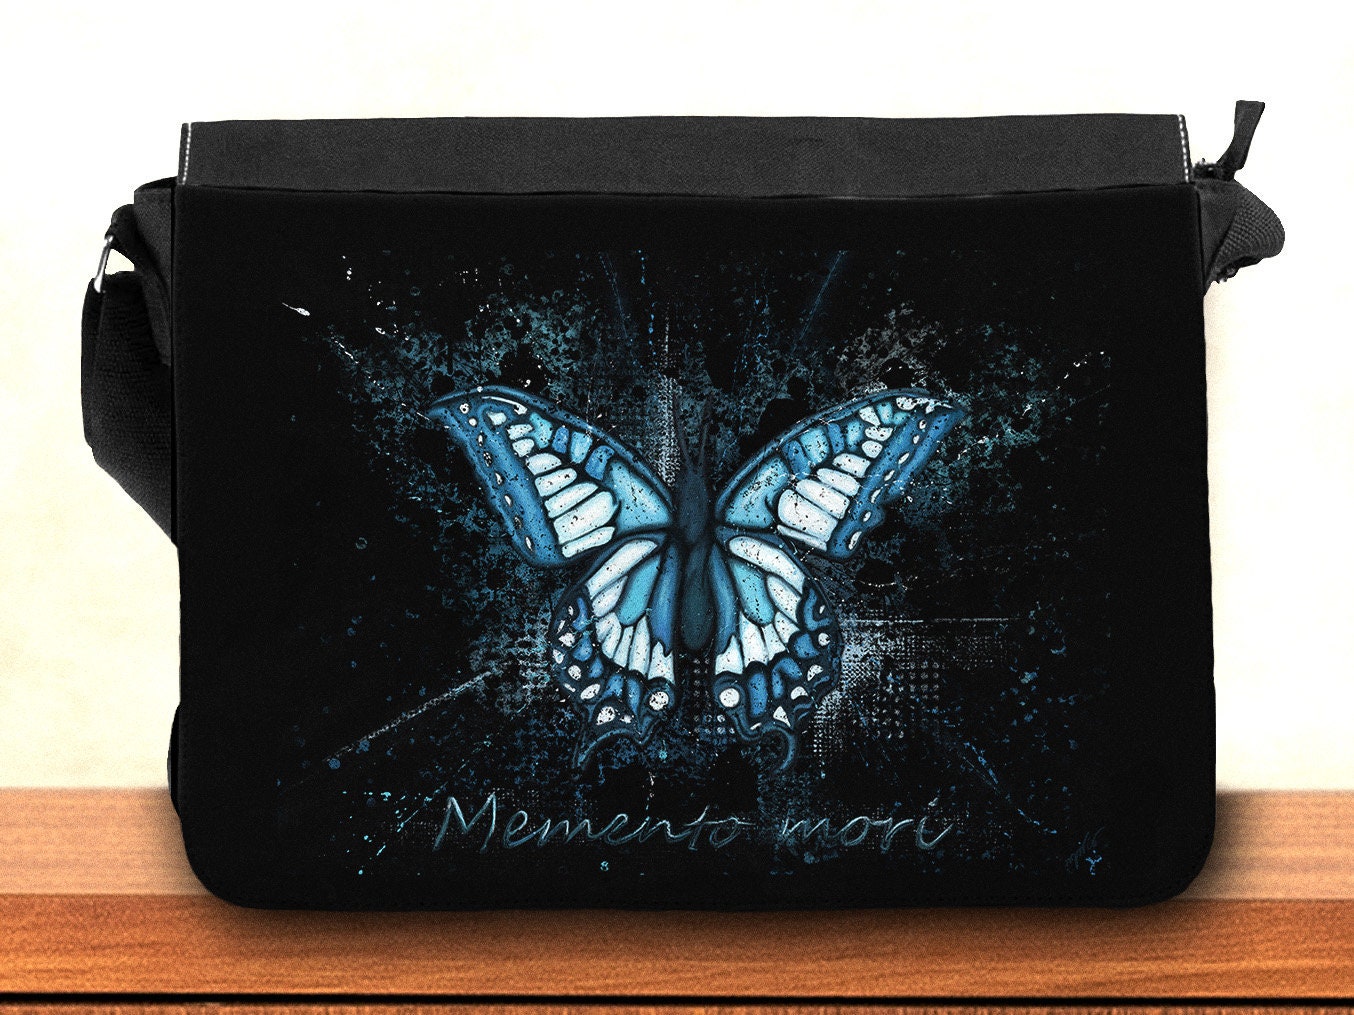 Black Glitter Flap Butterfly Crossbody Chain Bag Purse with Zipper